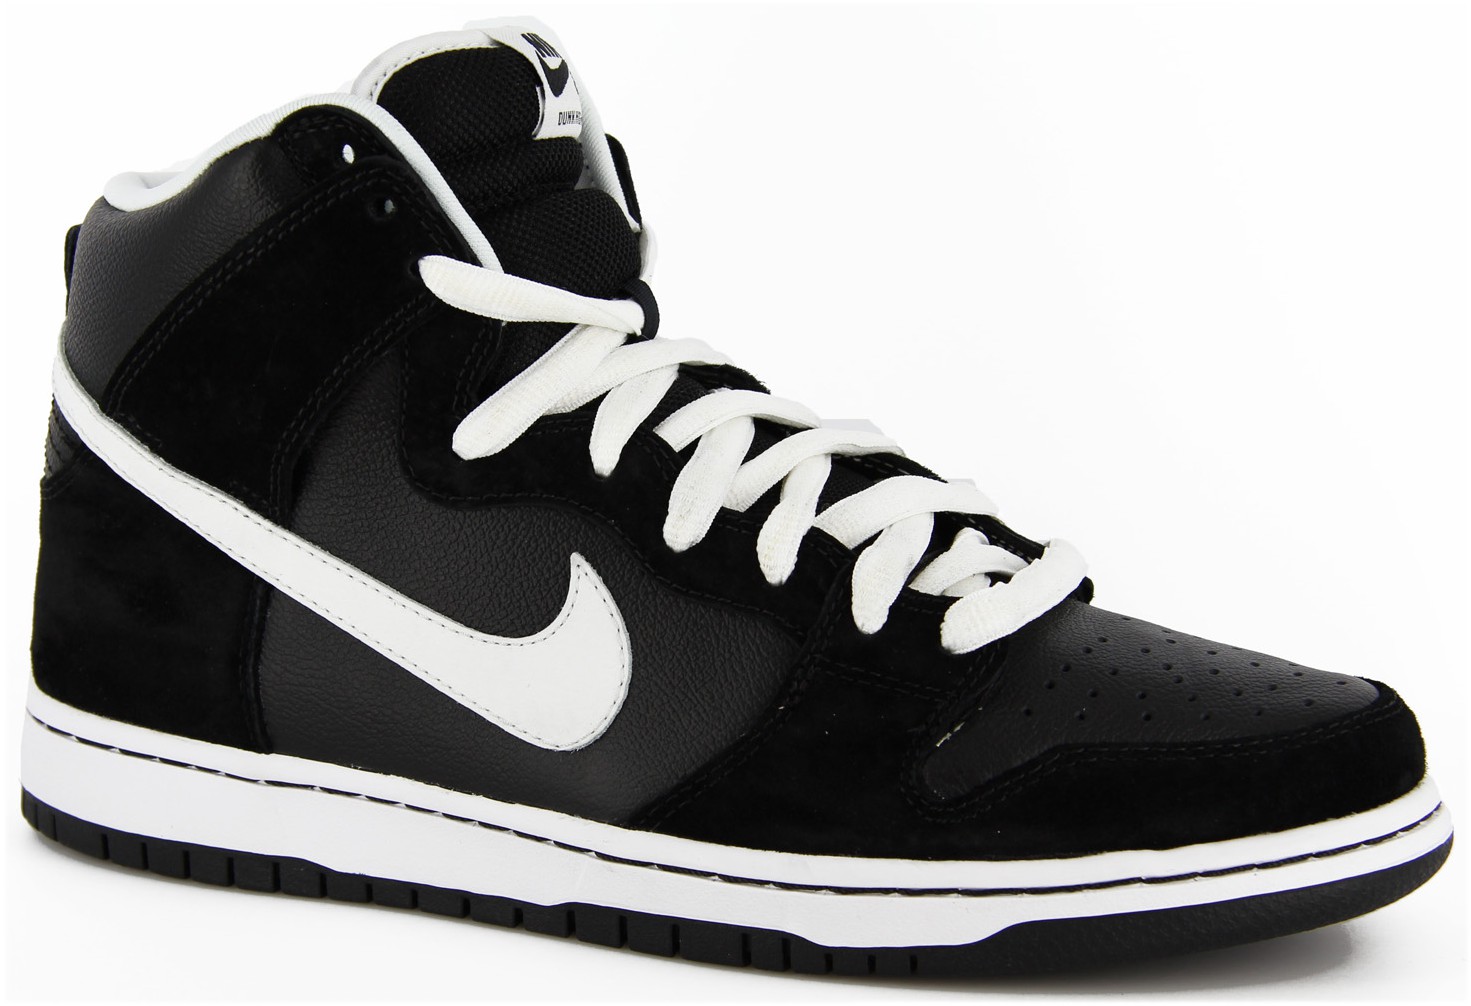 nike-sb-dunk-high-pro-sb-skate-shoes-black-white.jpg